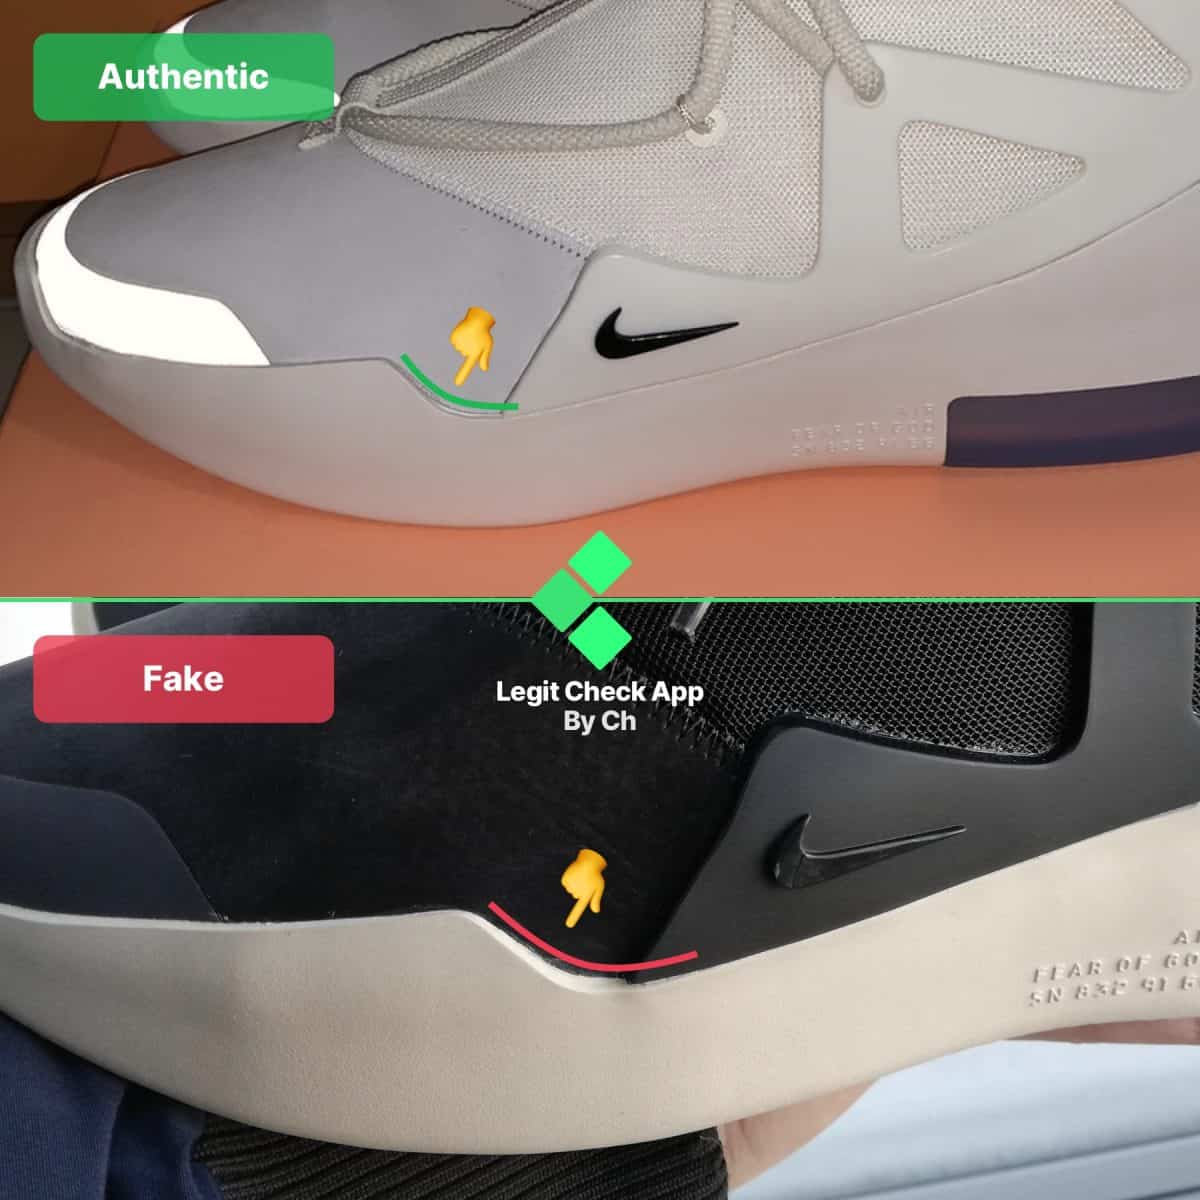 Nike FOG 1 Fake vs Real Guide